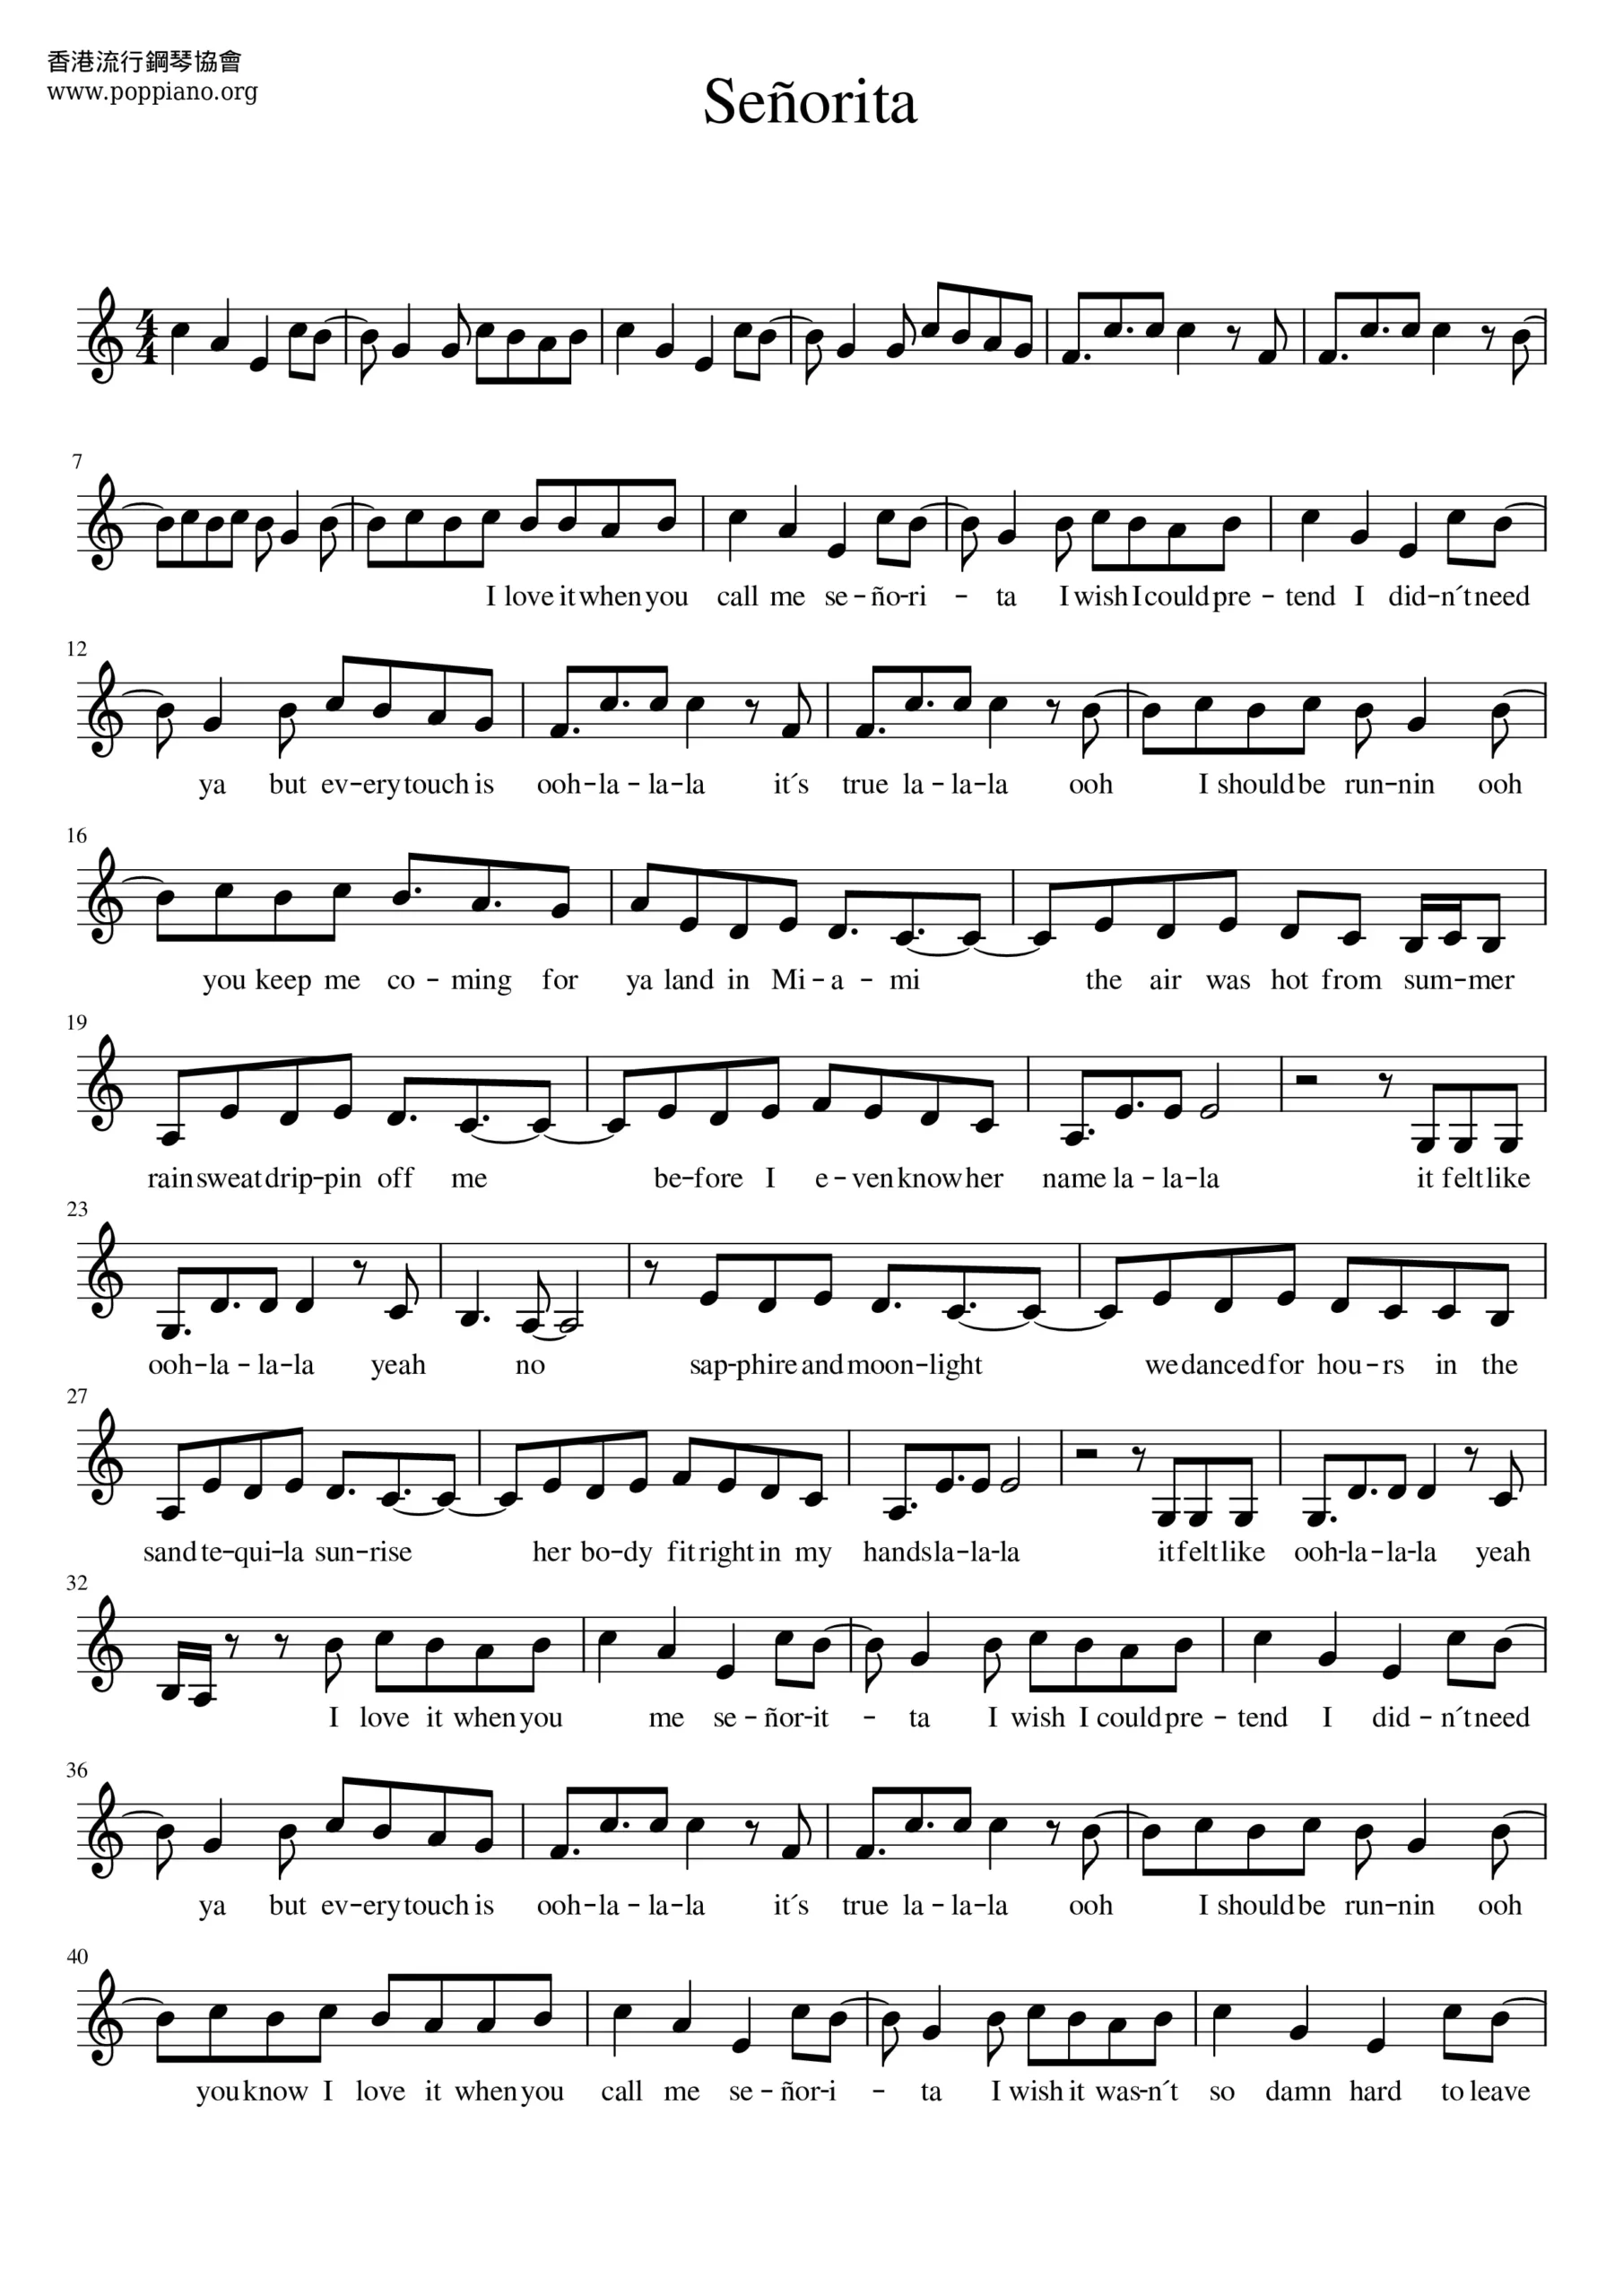 señorita version violin - What instrument is used in Señorita